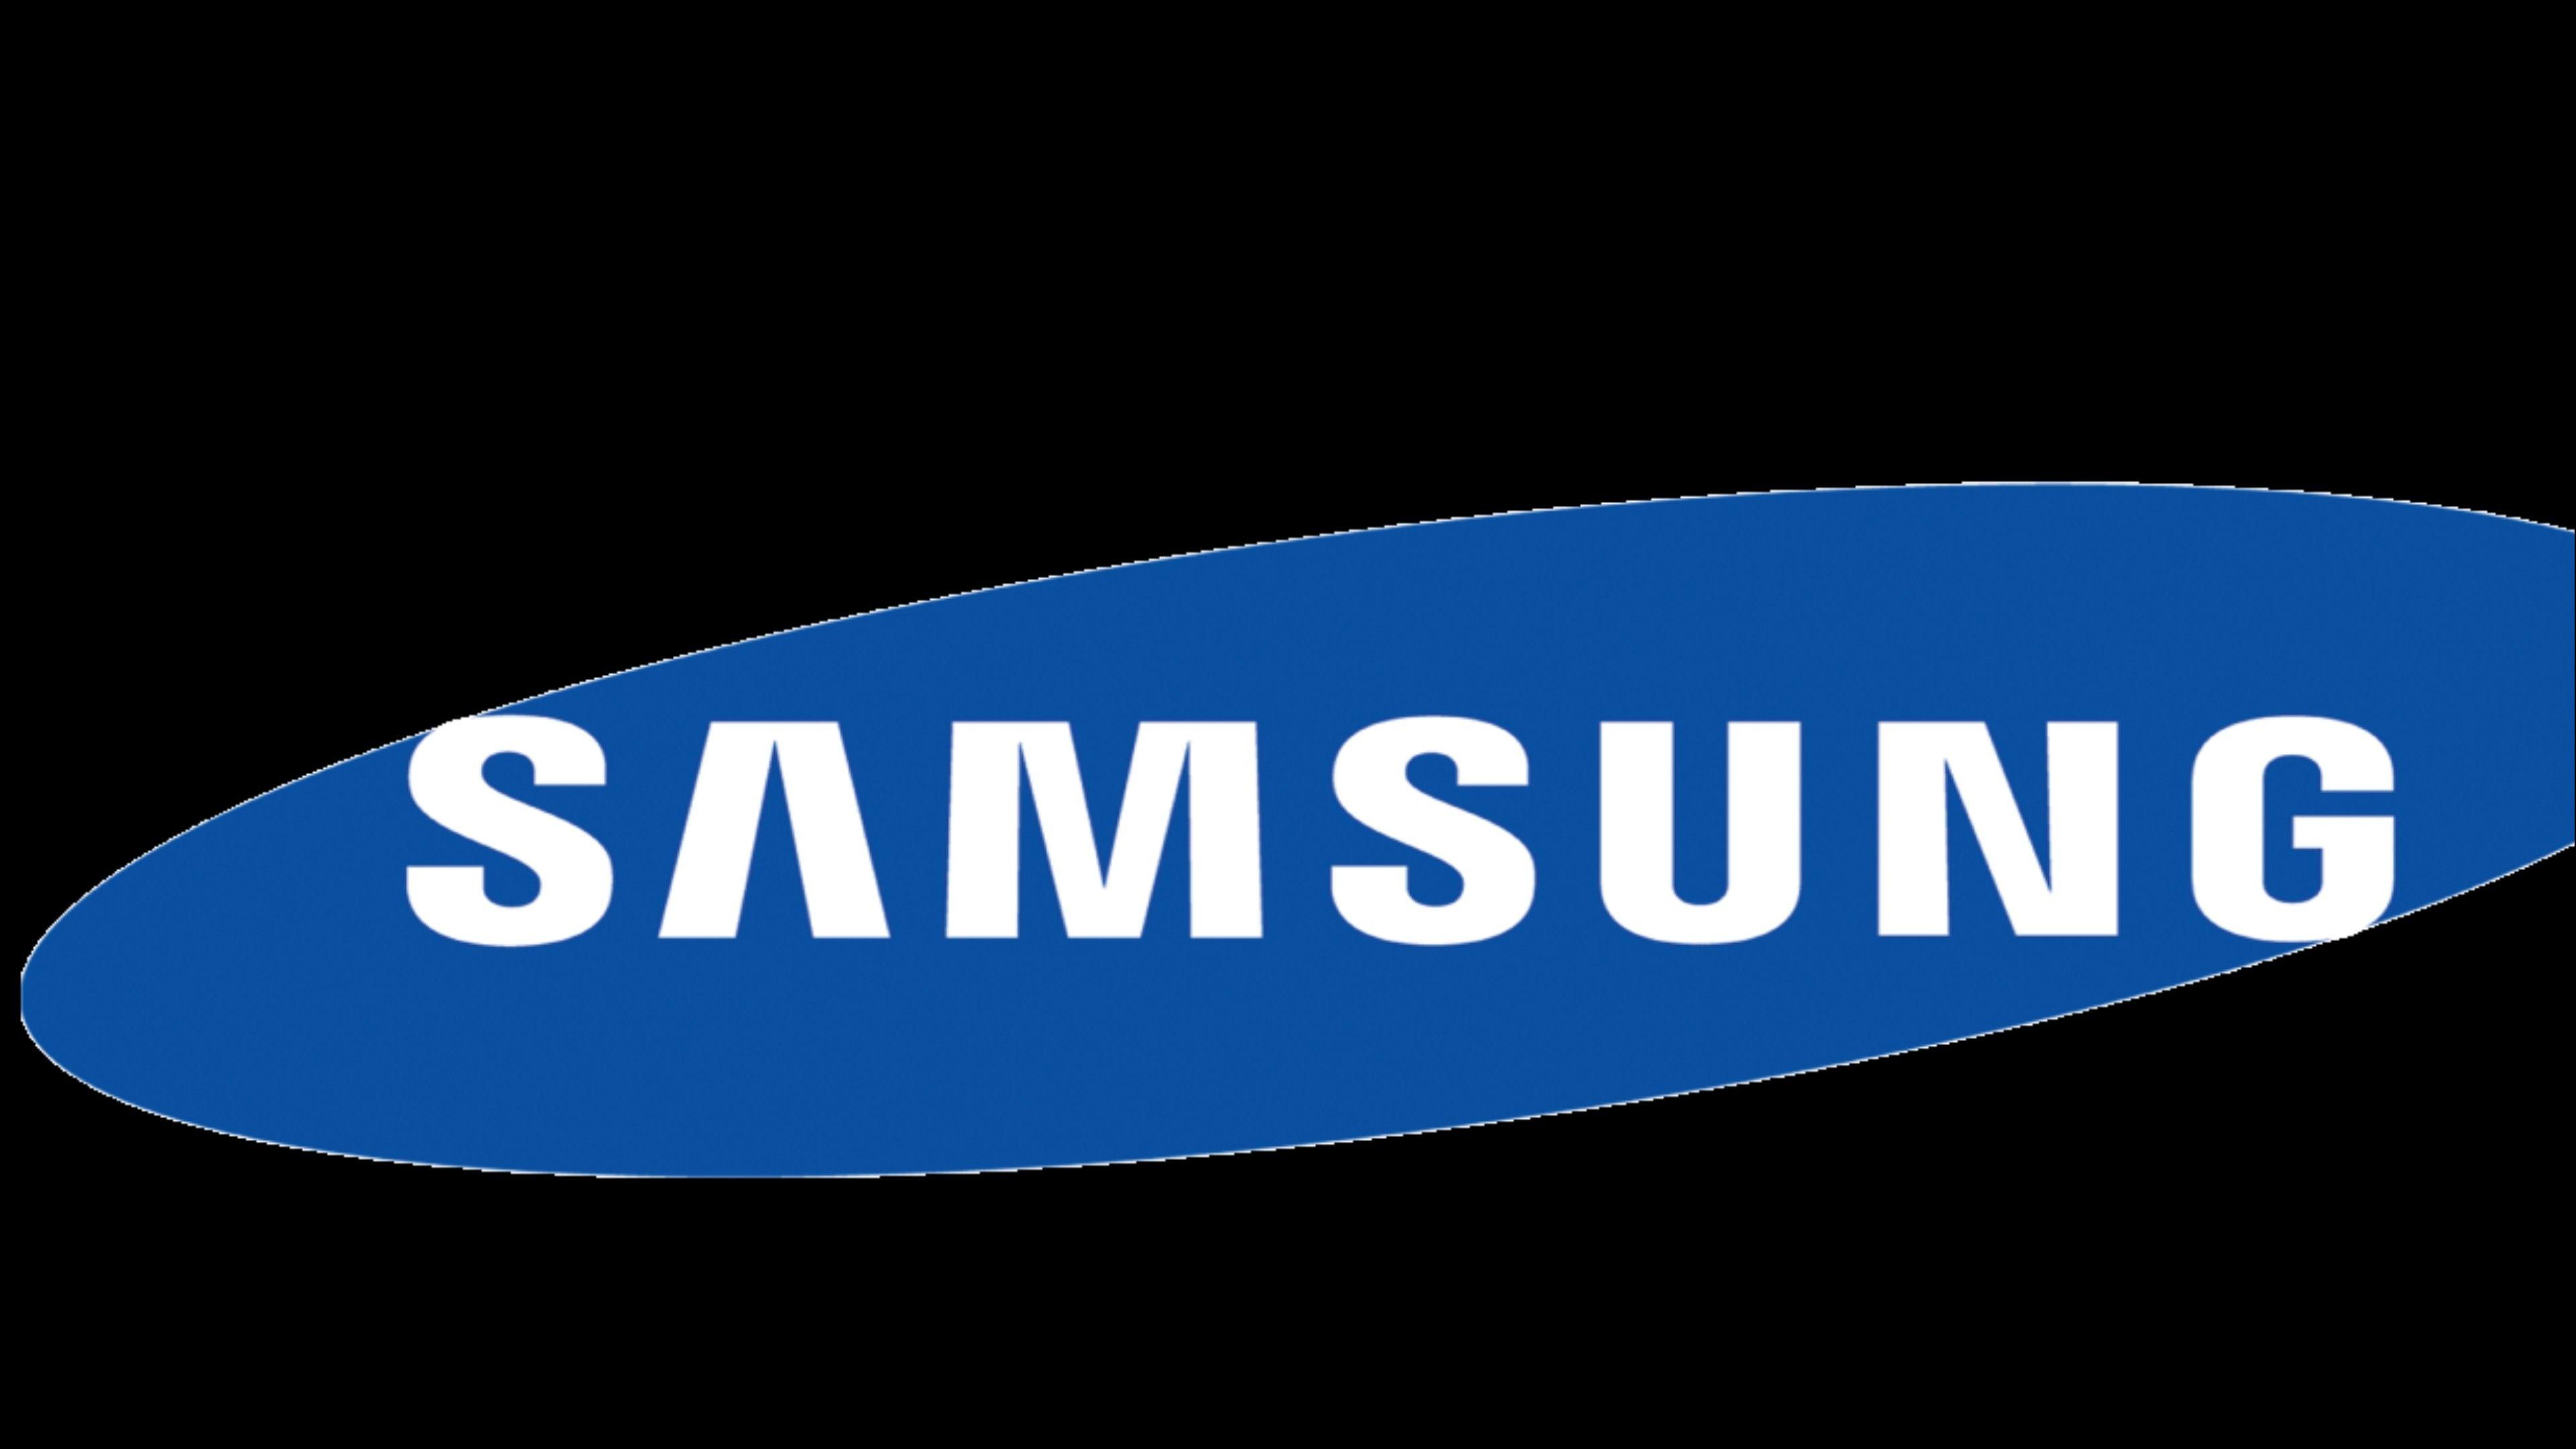 Samsung TV Logo - Samsung LED TV Logo Wallpapers - Wallpaper Cave